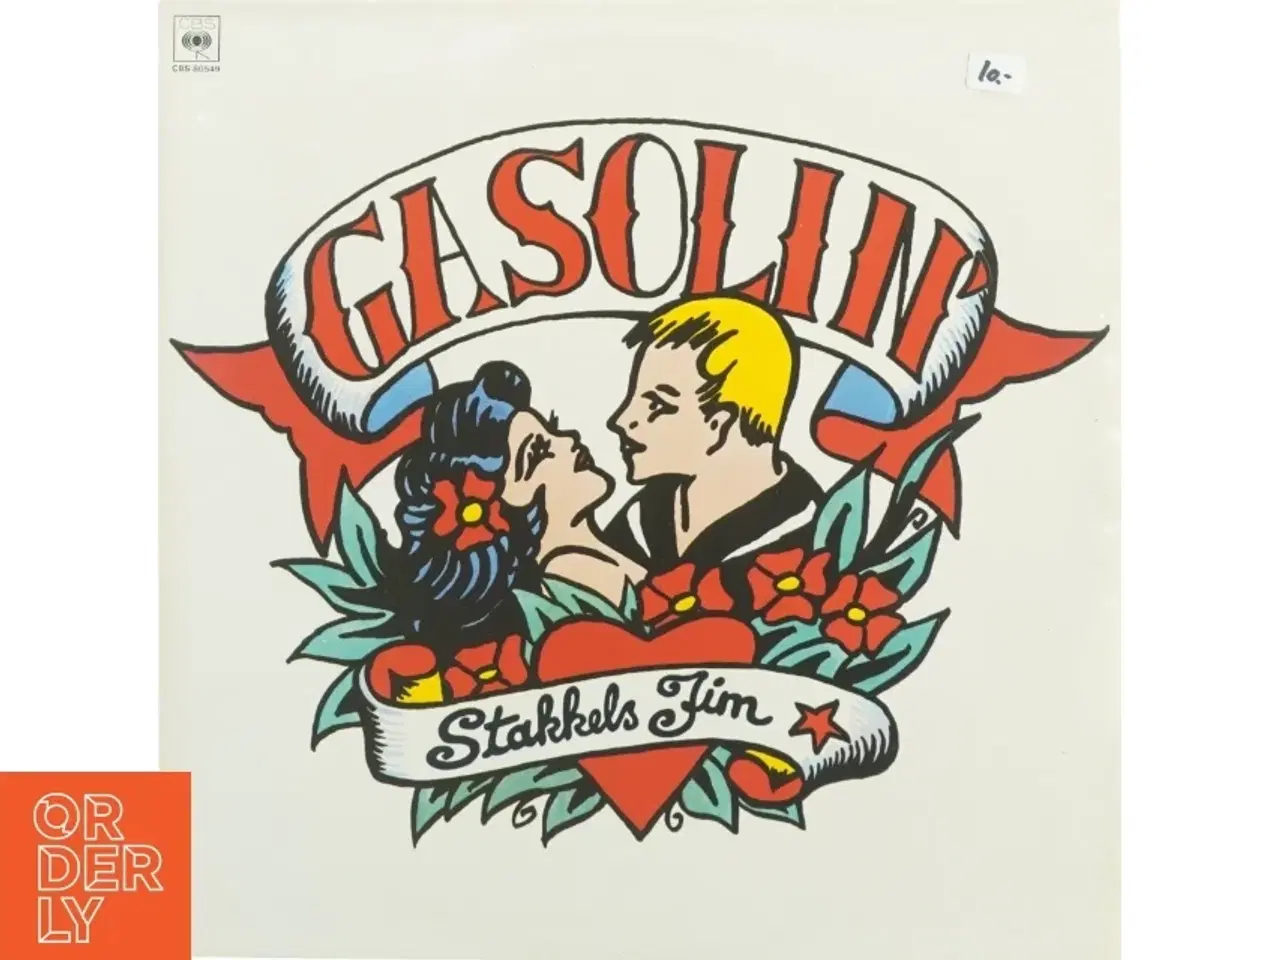 Billede 1 - Gasolin' Stakkels Jim LP Vinylplade fra CBS (str. 31 x 31 cm)